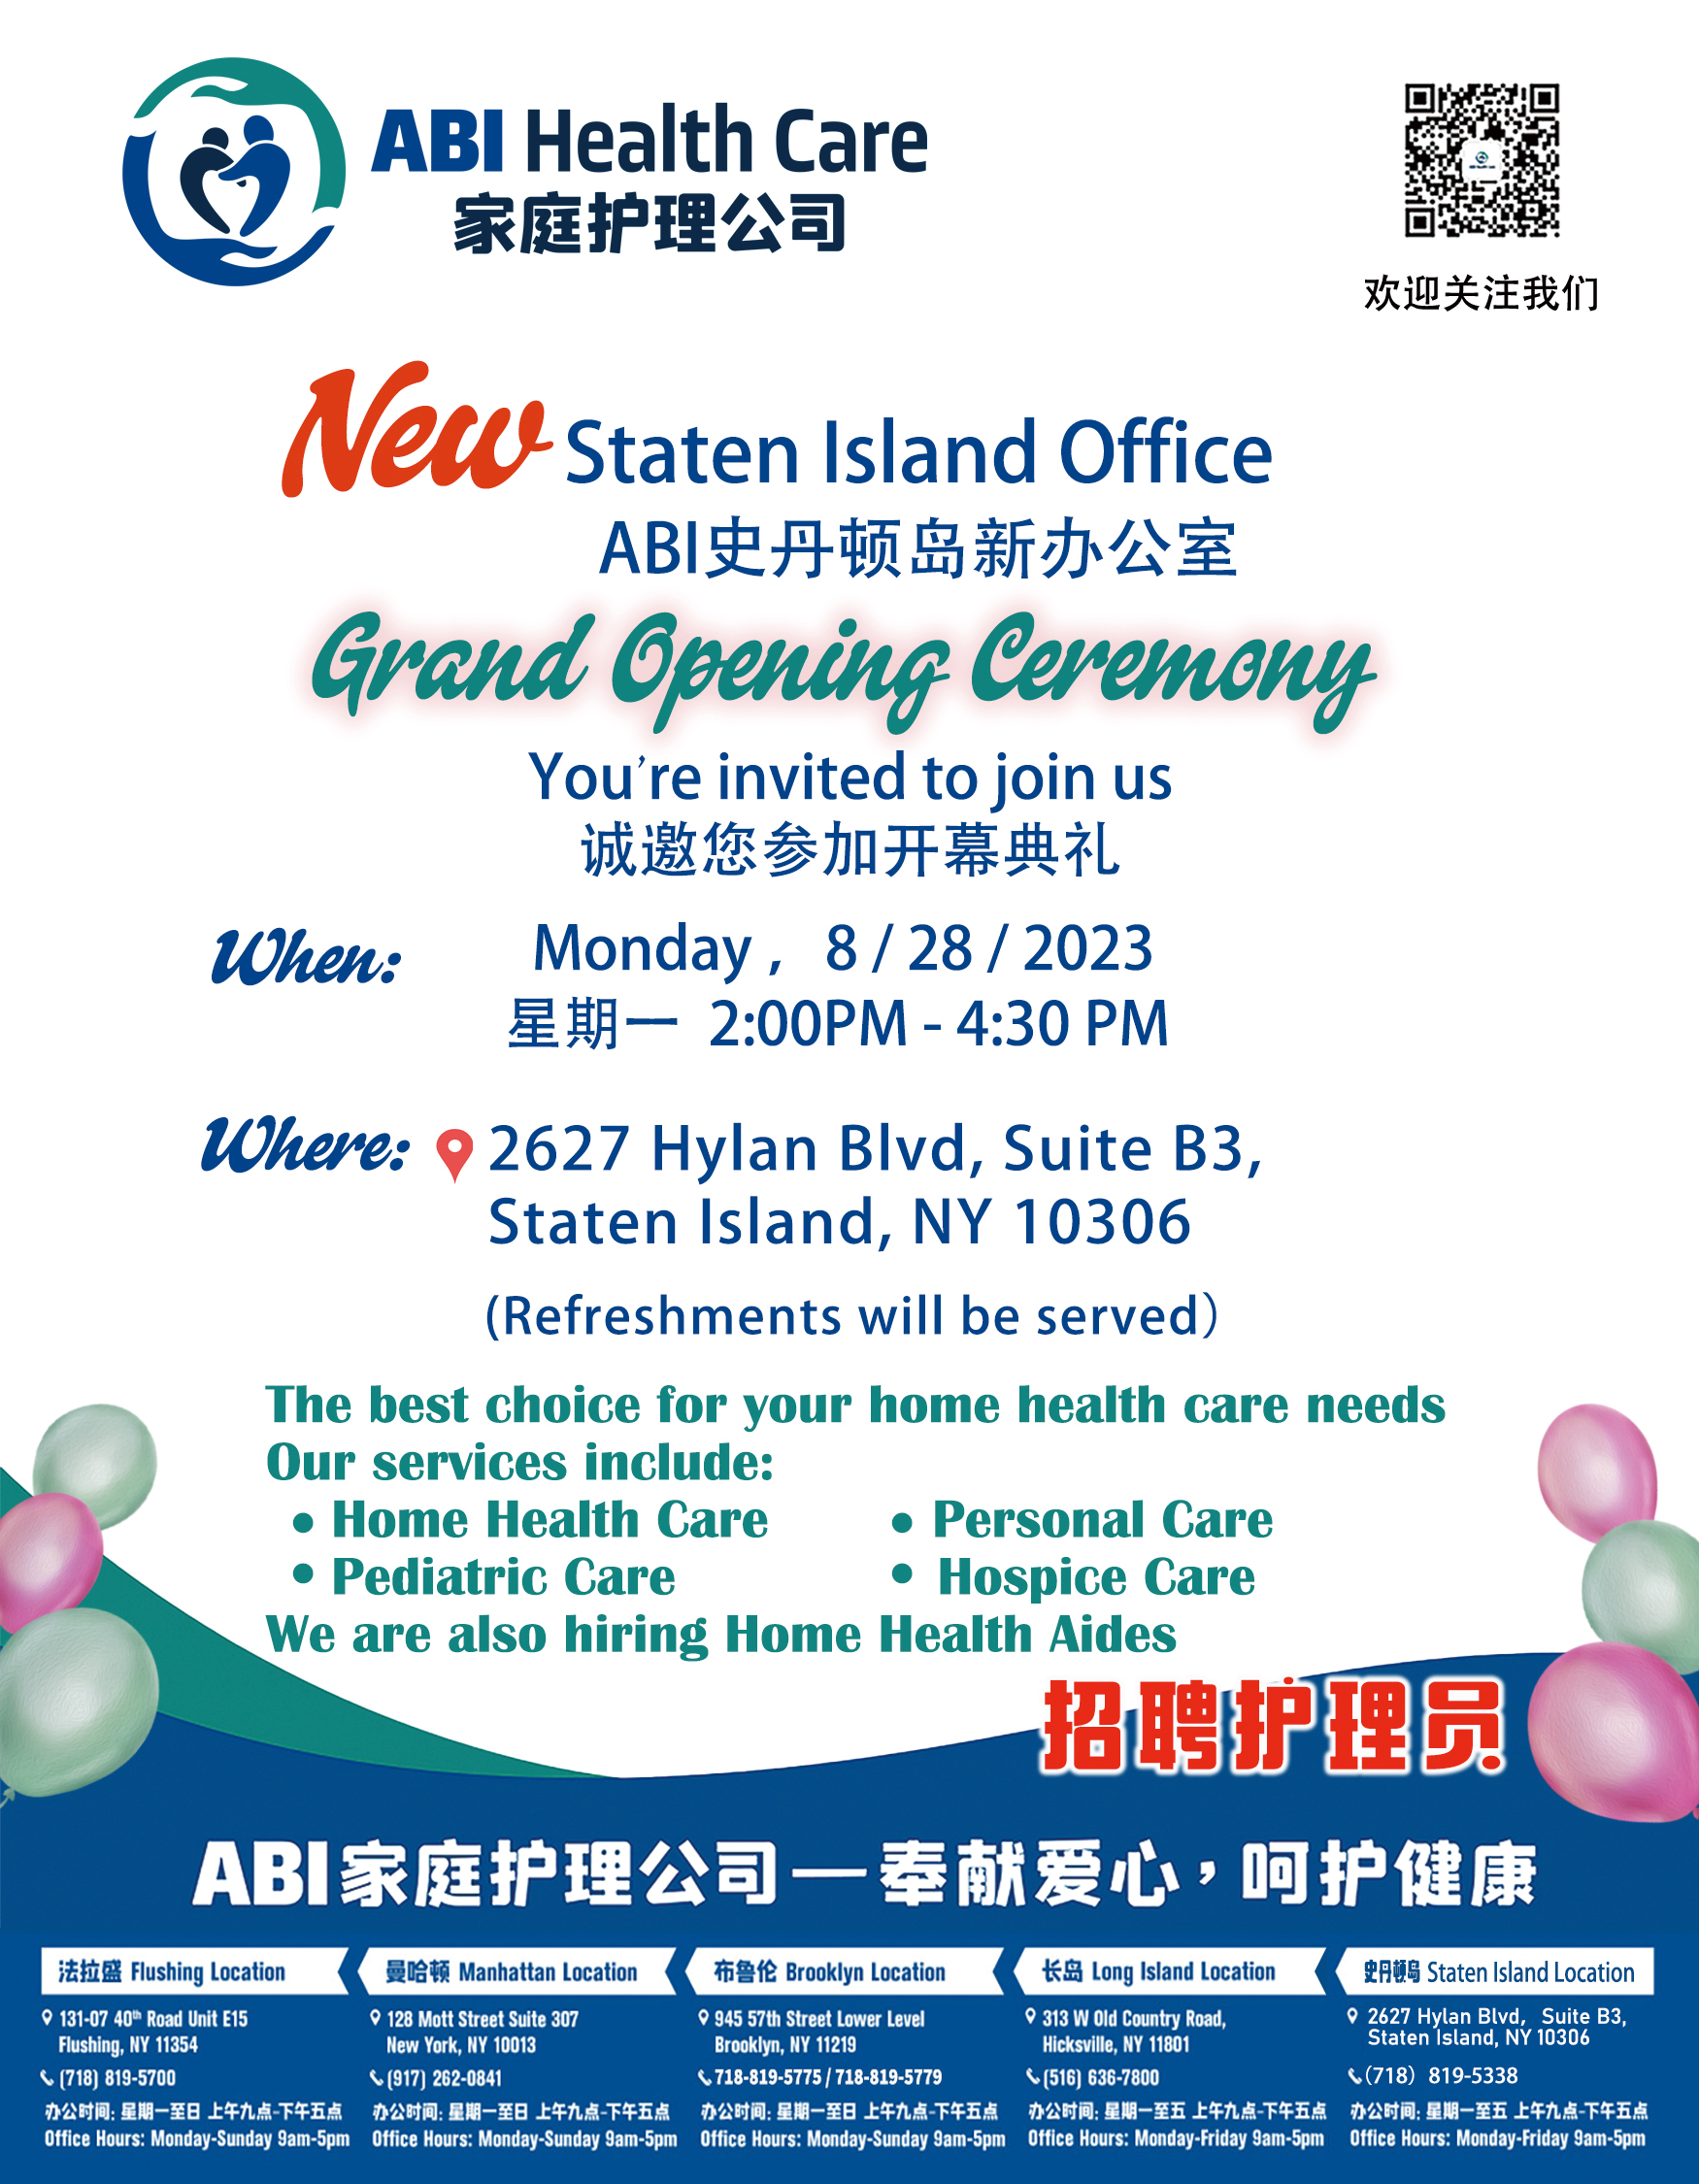 ABI Staten Island Office Grand Opening Ceremony Invitation Flyer